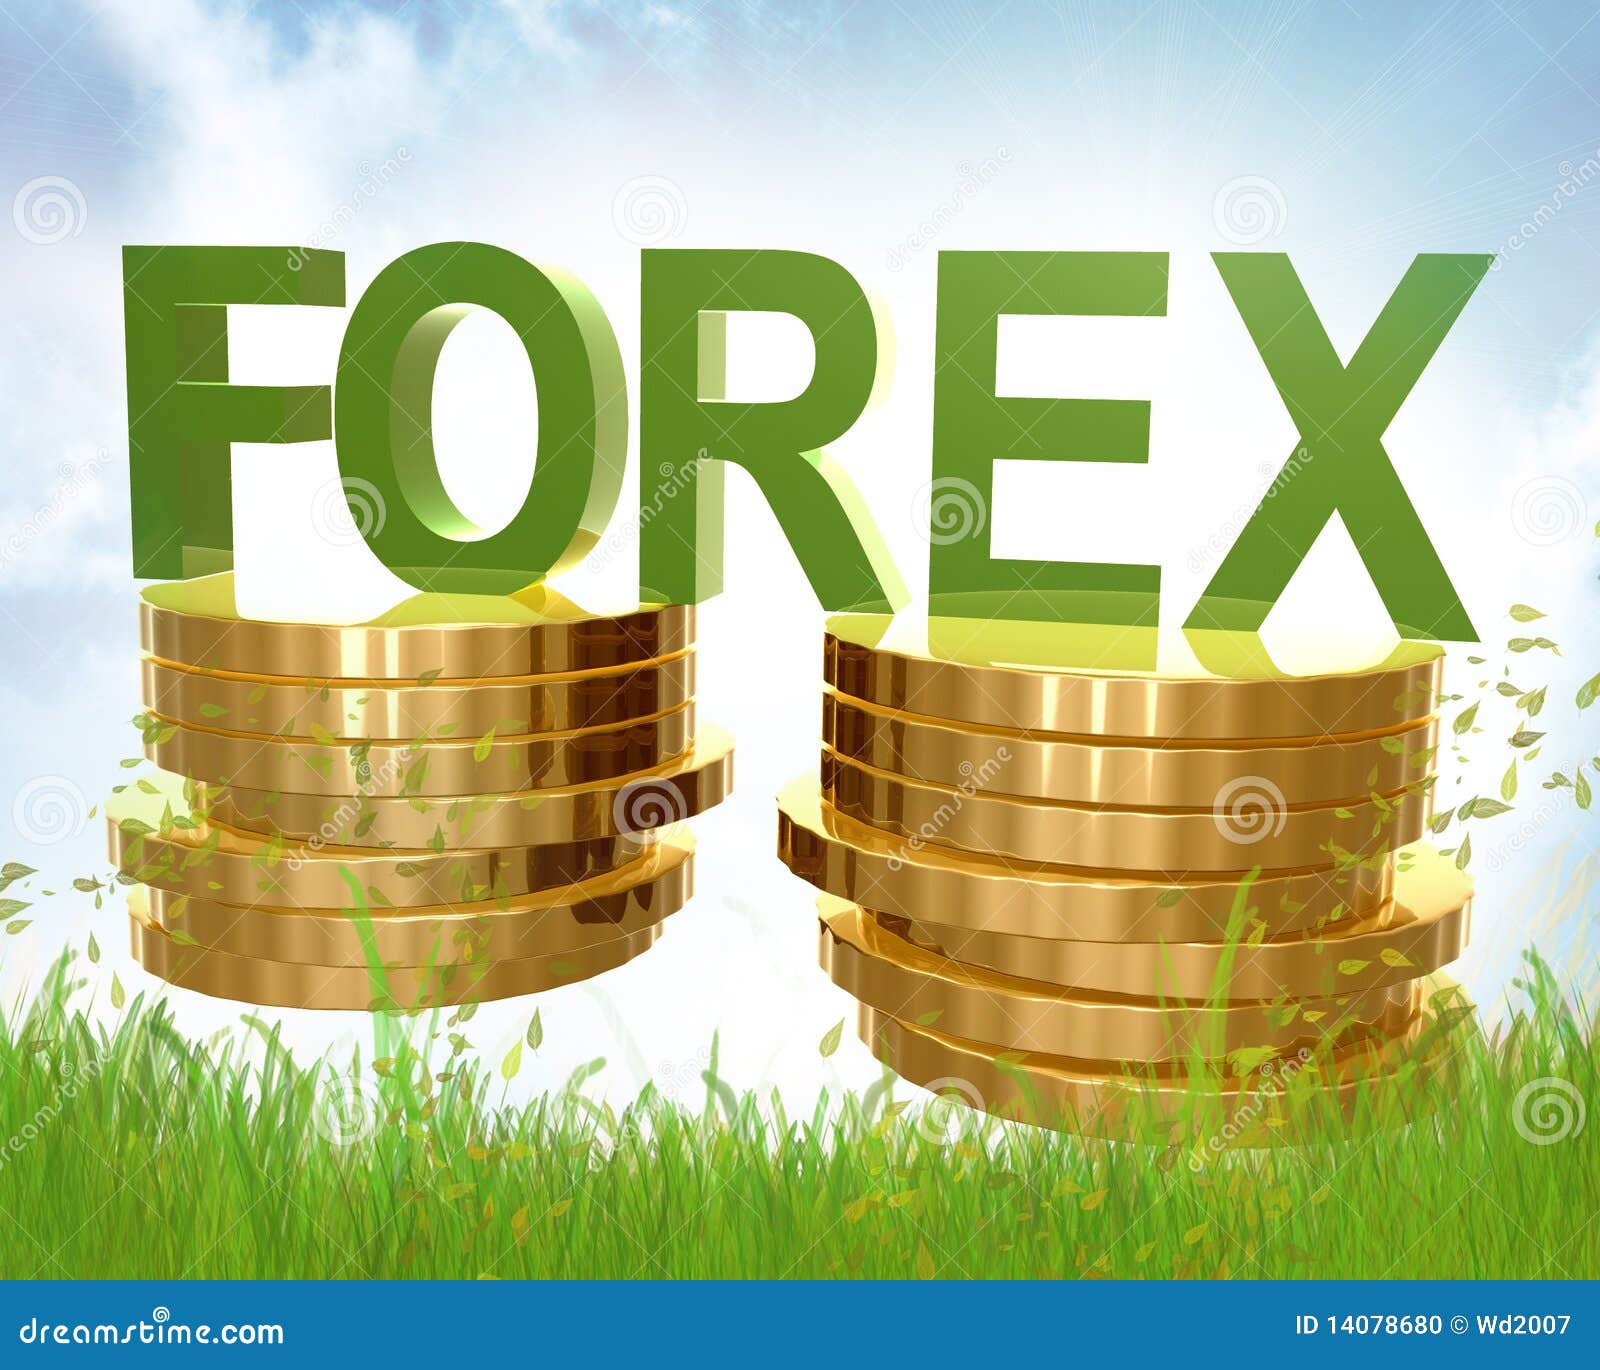 Belajar trading gold forex symbol cara belajar trading forex bagi pemula